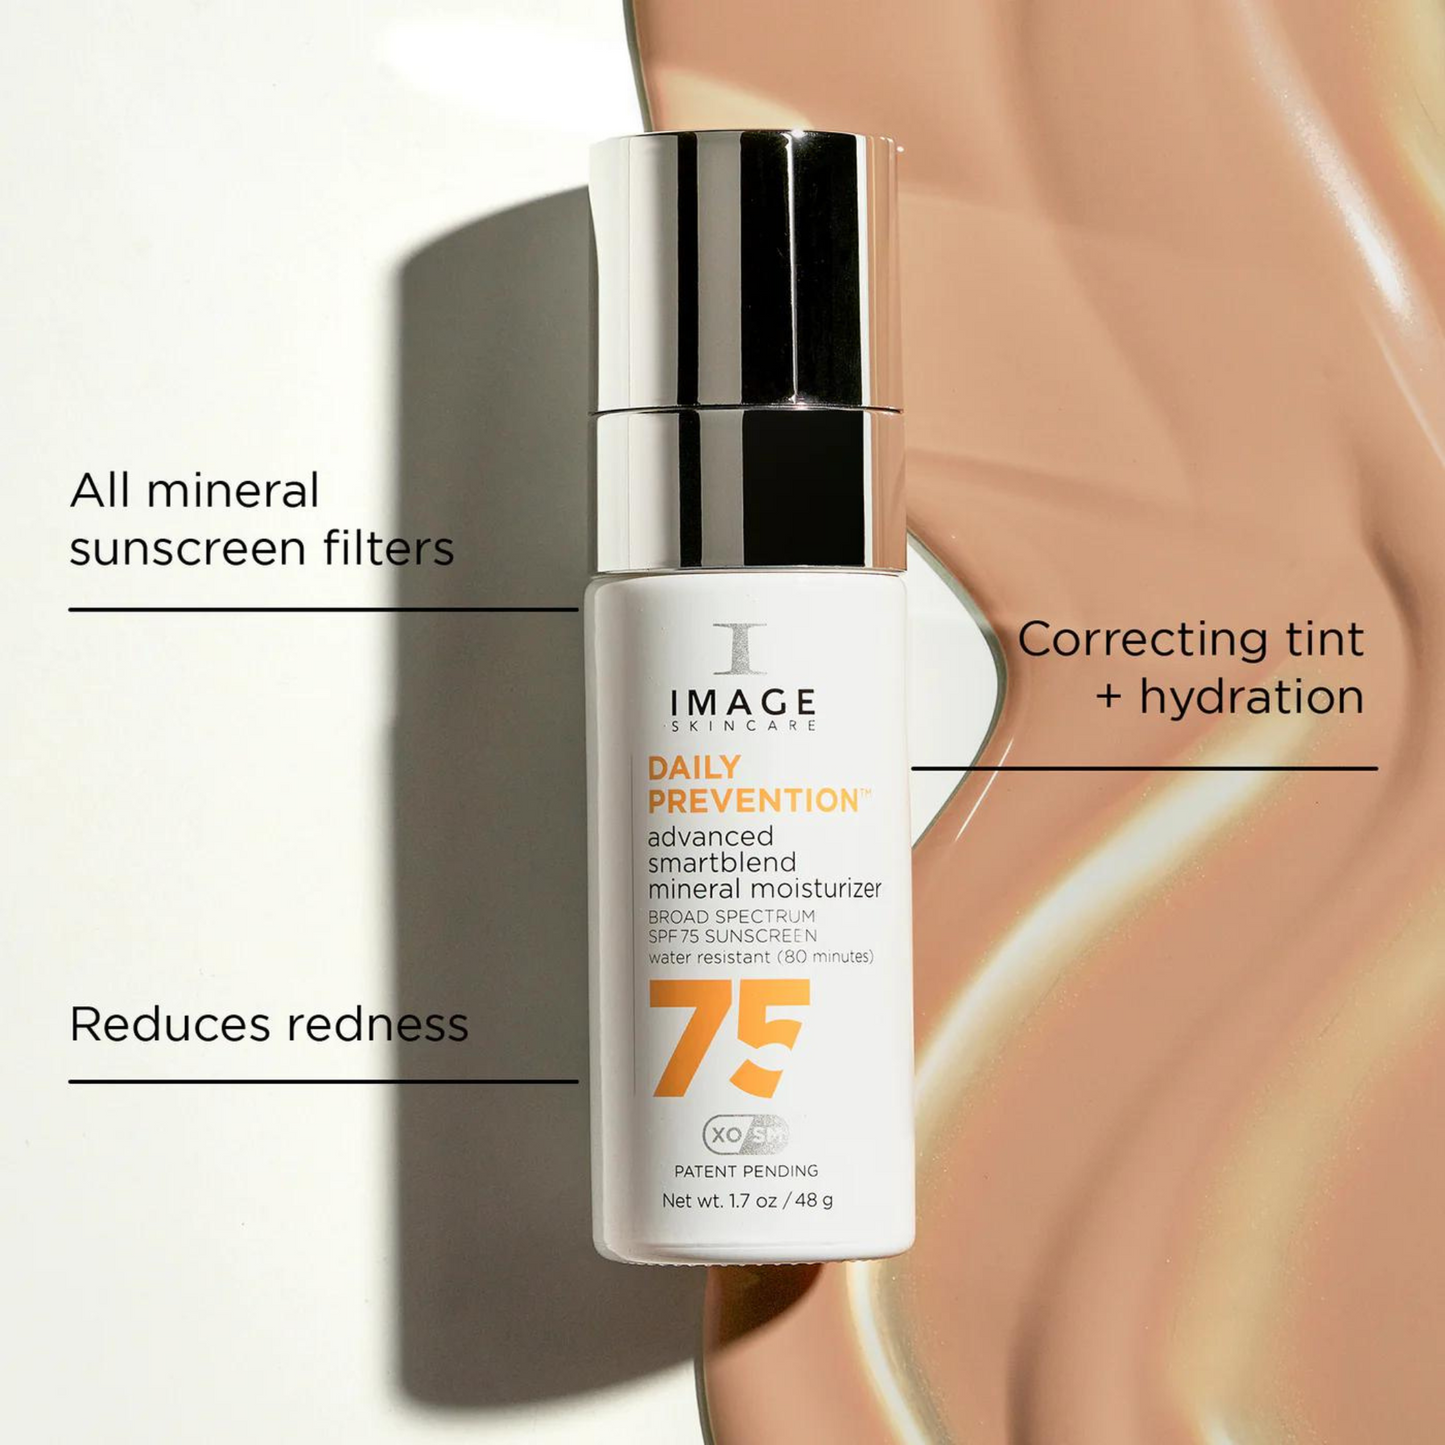 DAILY PREVENTION advanced smartblend mineral moisturizer SPF 75 | IMAGE Skincare